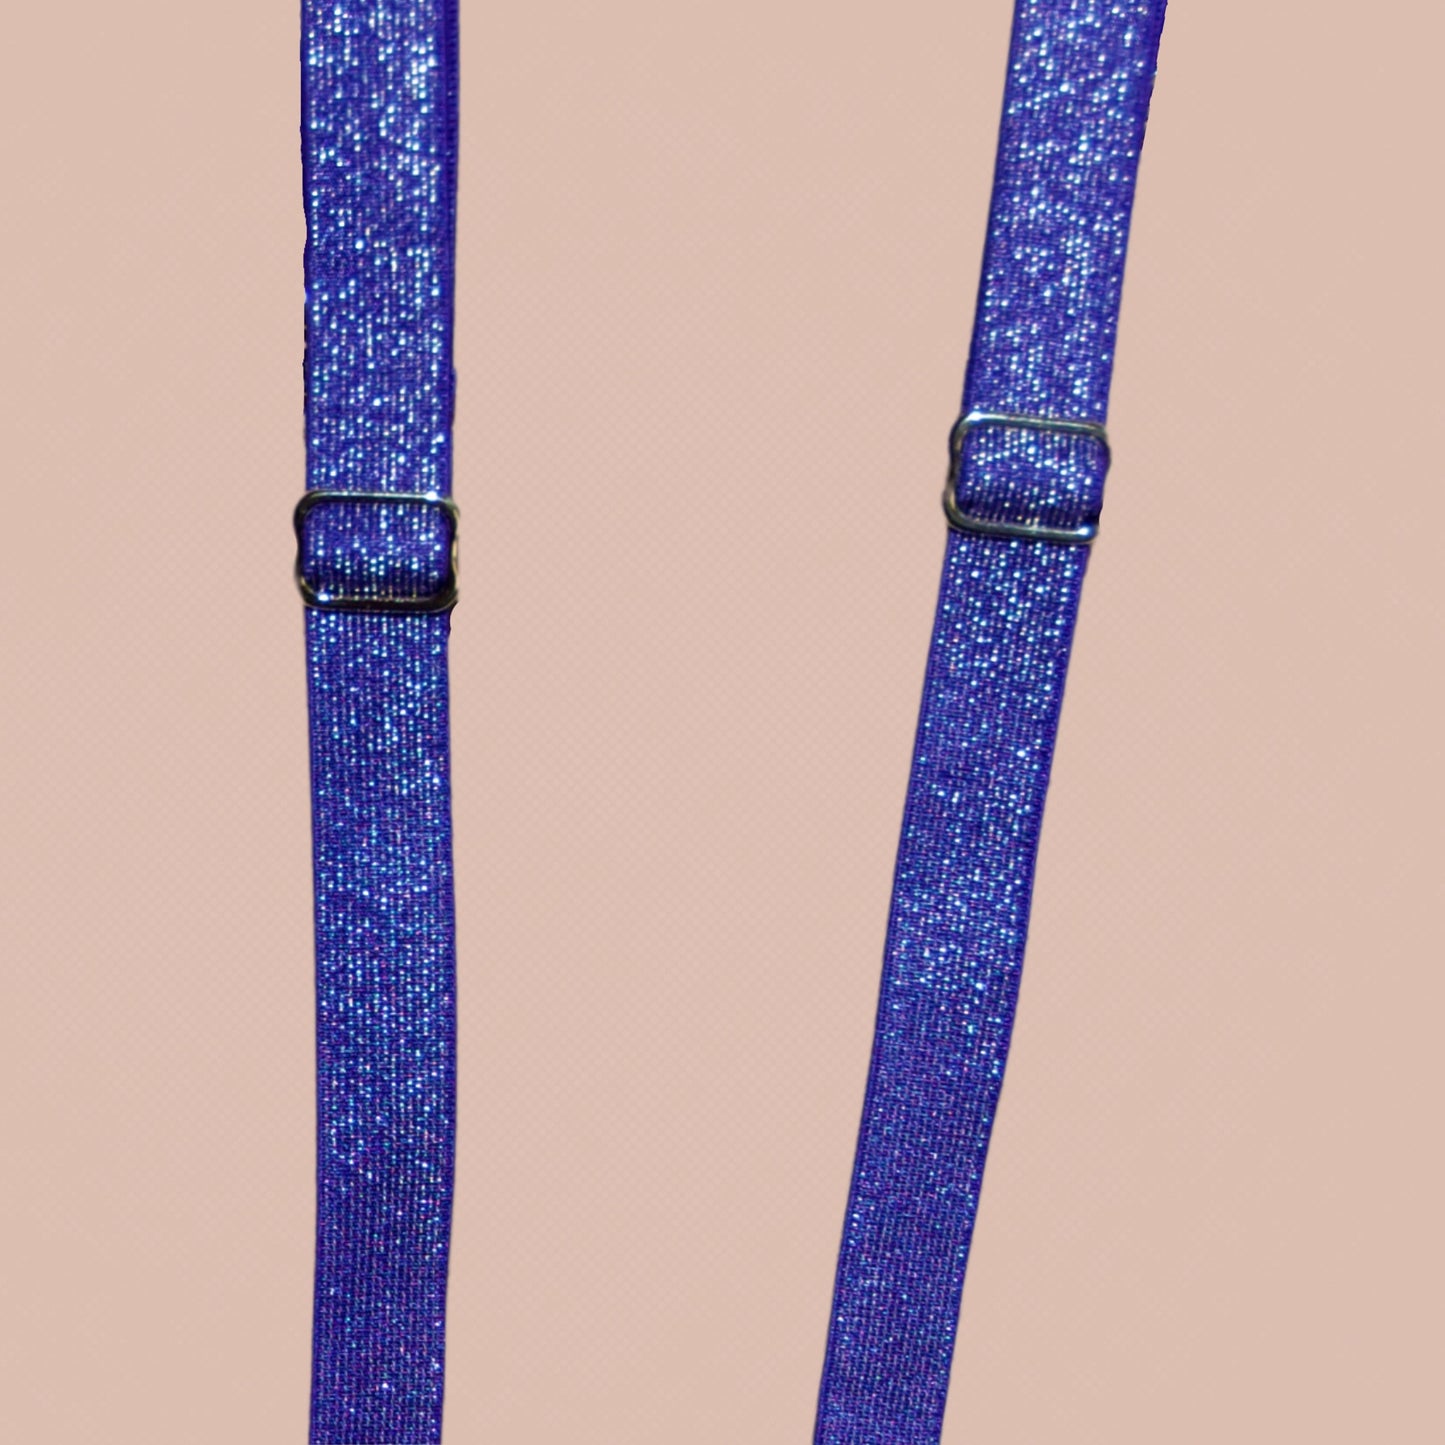 Set of Metallic interchangeable her-rah Straps in Royal Blue.